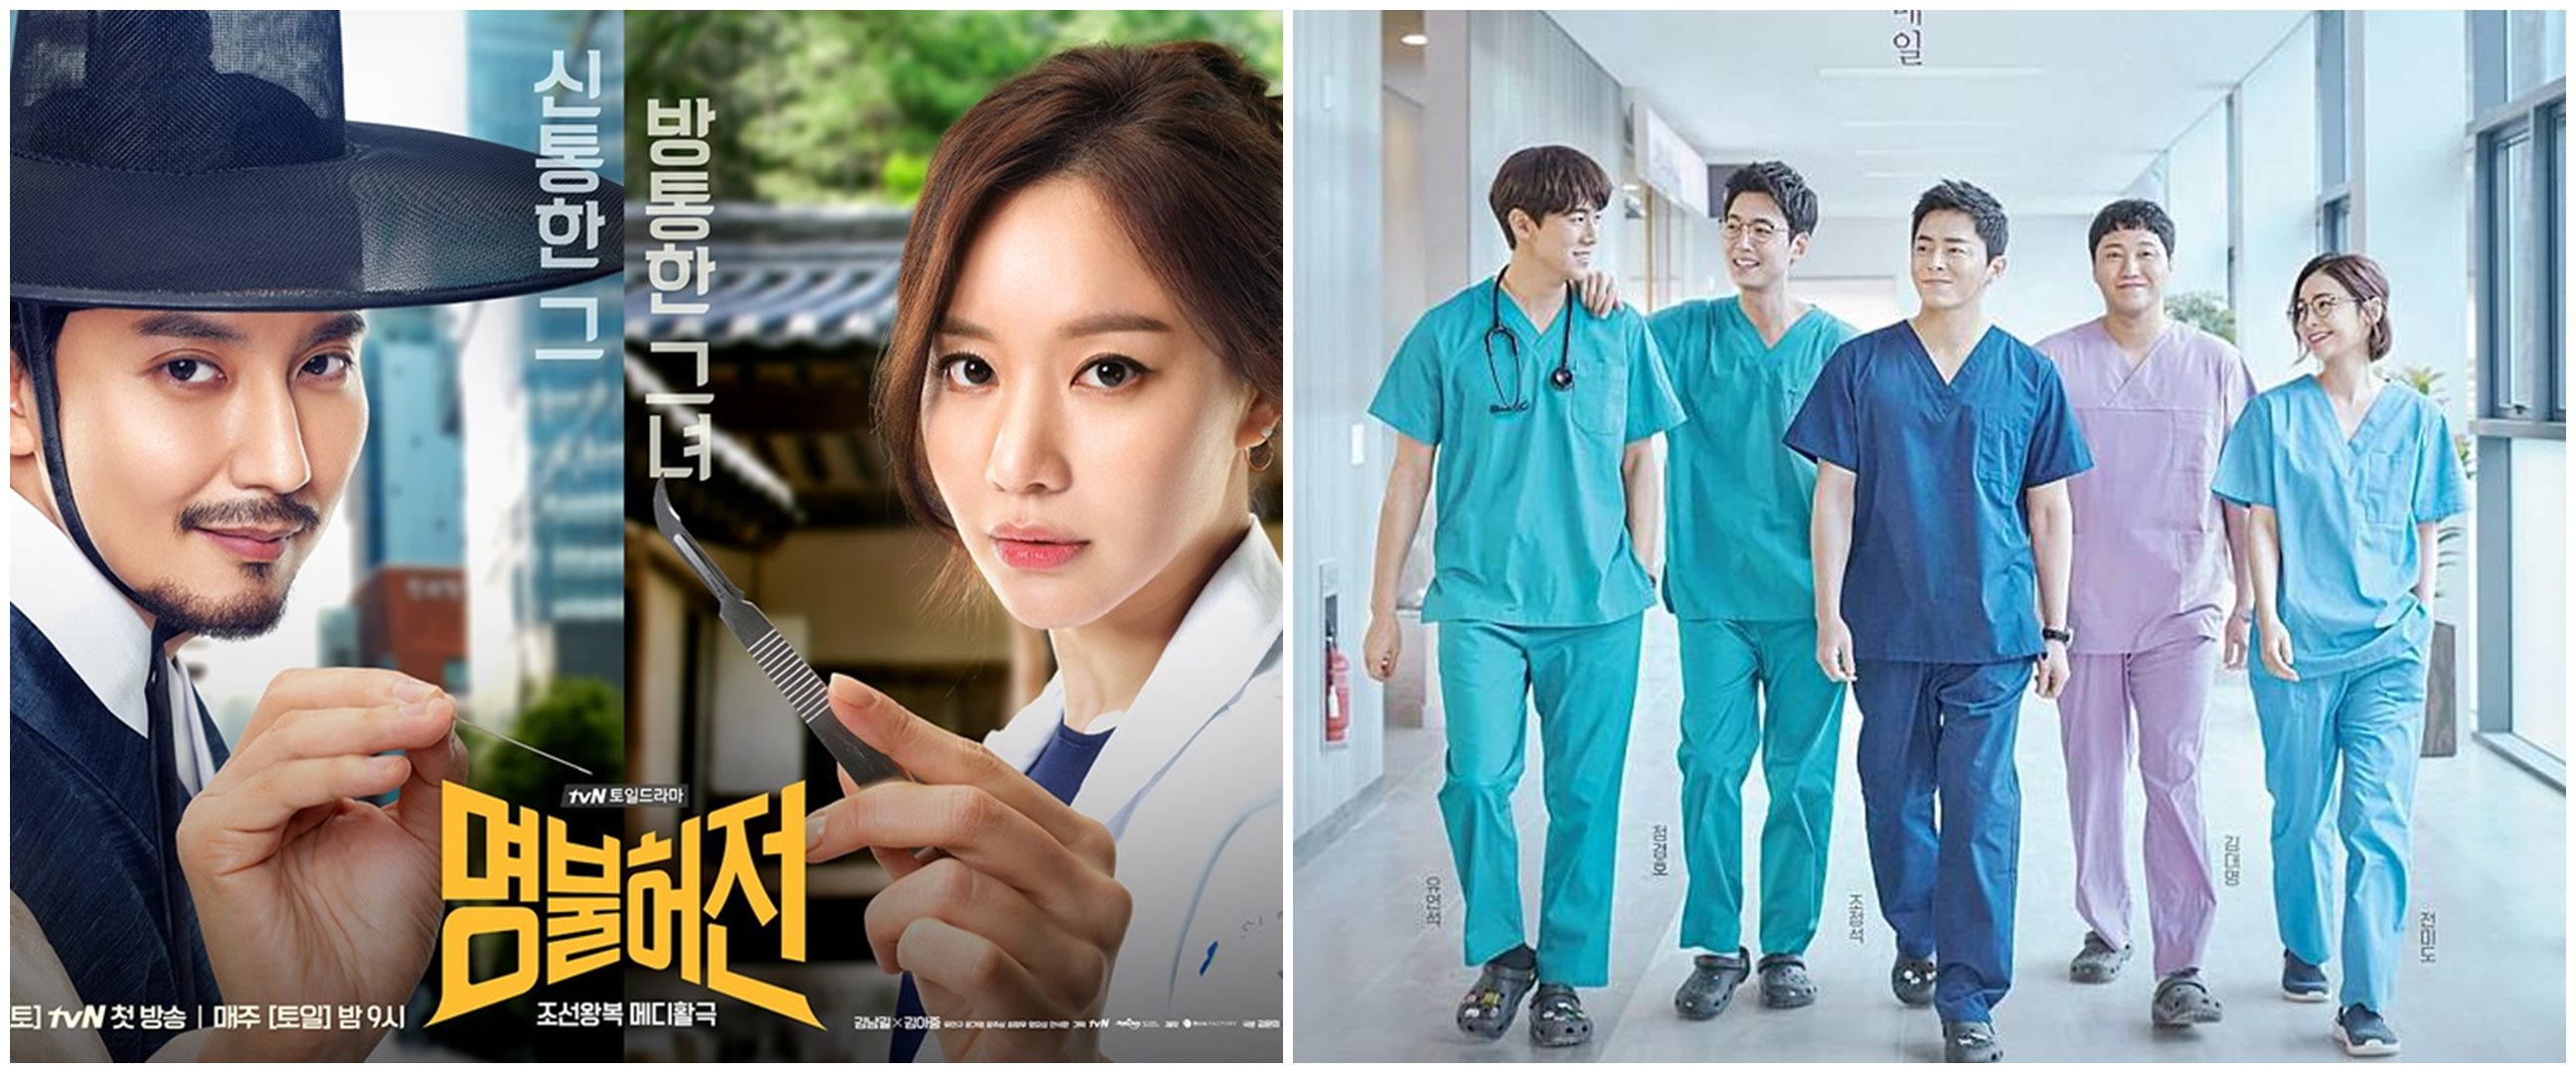 13 Drama Korea terlaris genre romantis, Hospital Playlist favorit